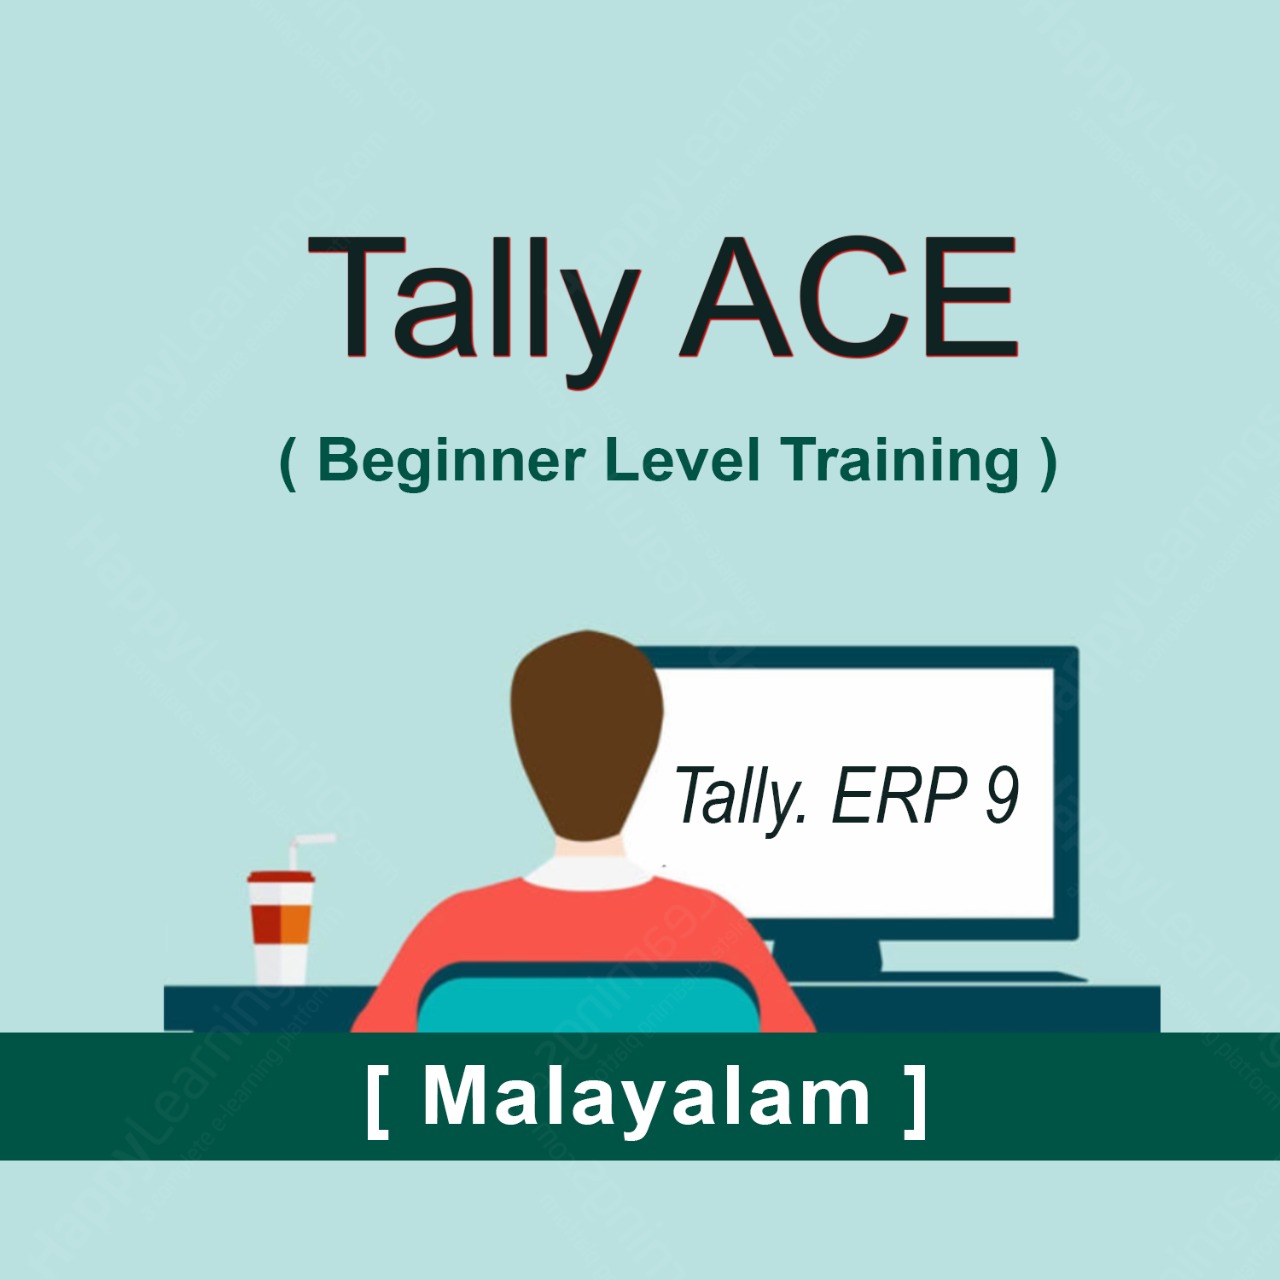 Tally ACE Training